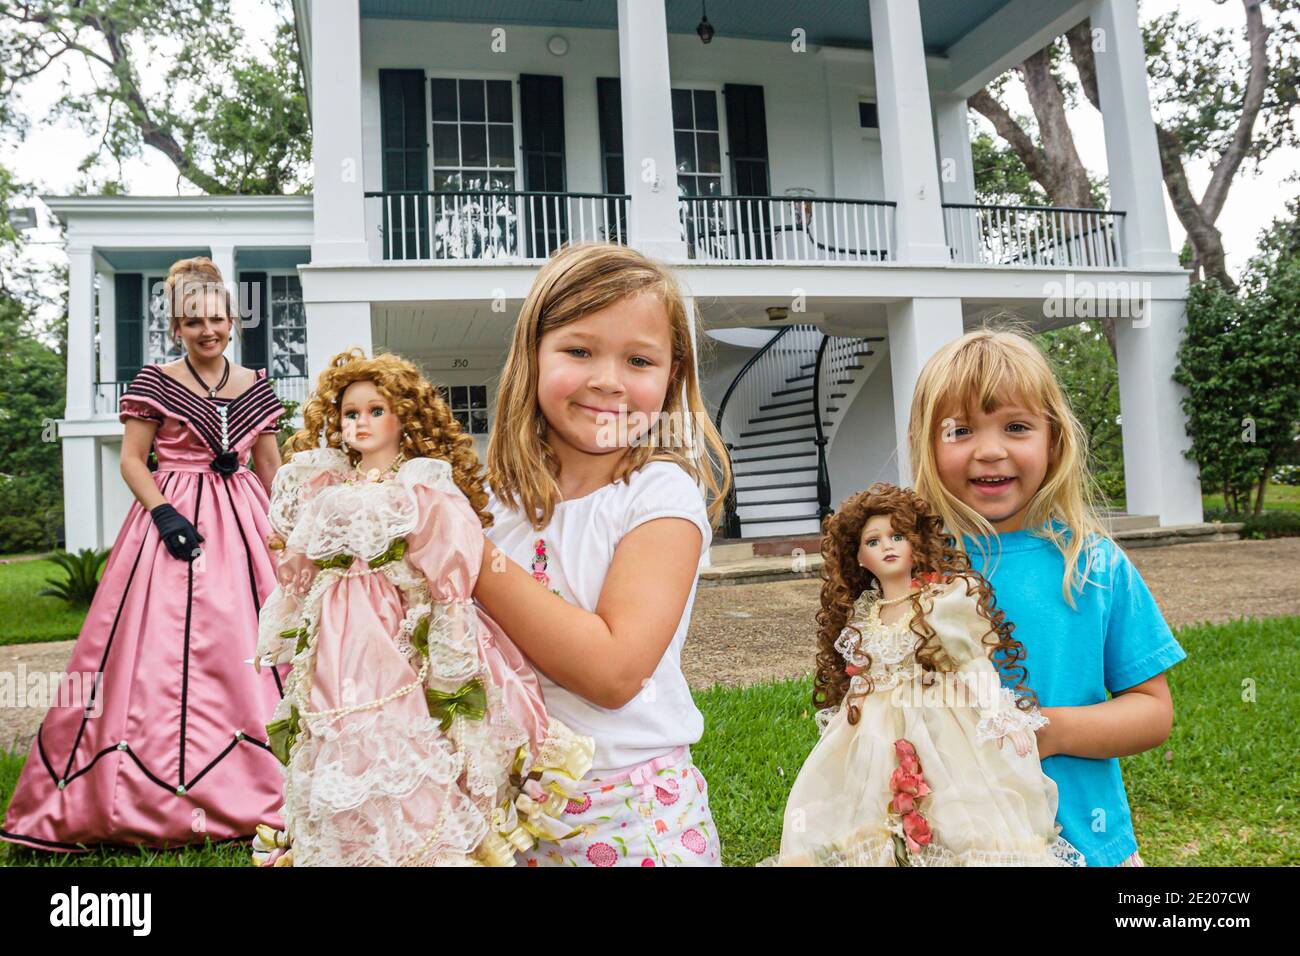 Alabama Mobile Oakleigh Historic Complex 1833 Greek Revival Mansion, Frau weiblich Guide Periode Kleid Outfit Mädchen Mädchen Kinder Puppen, Stockfoto